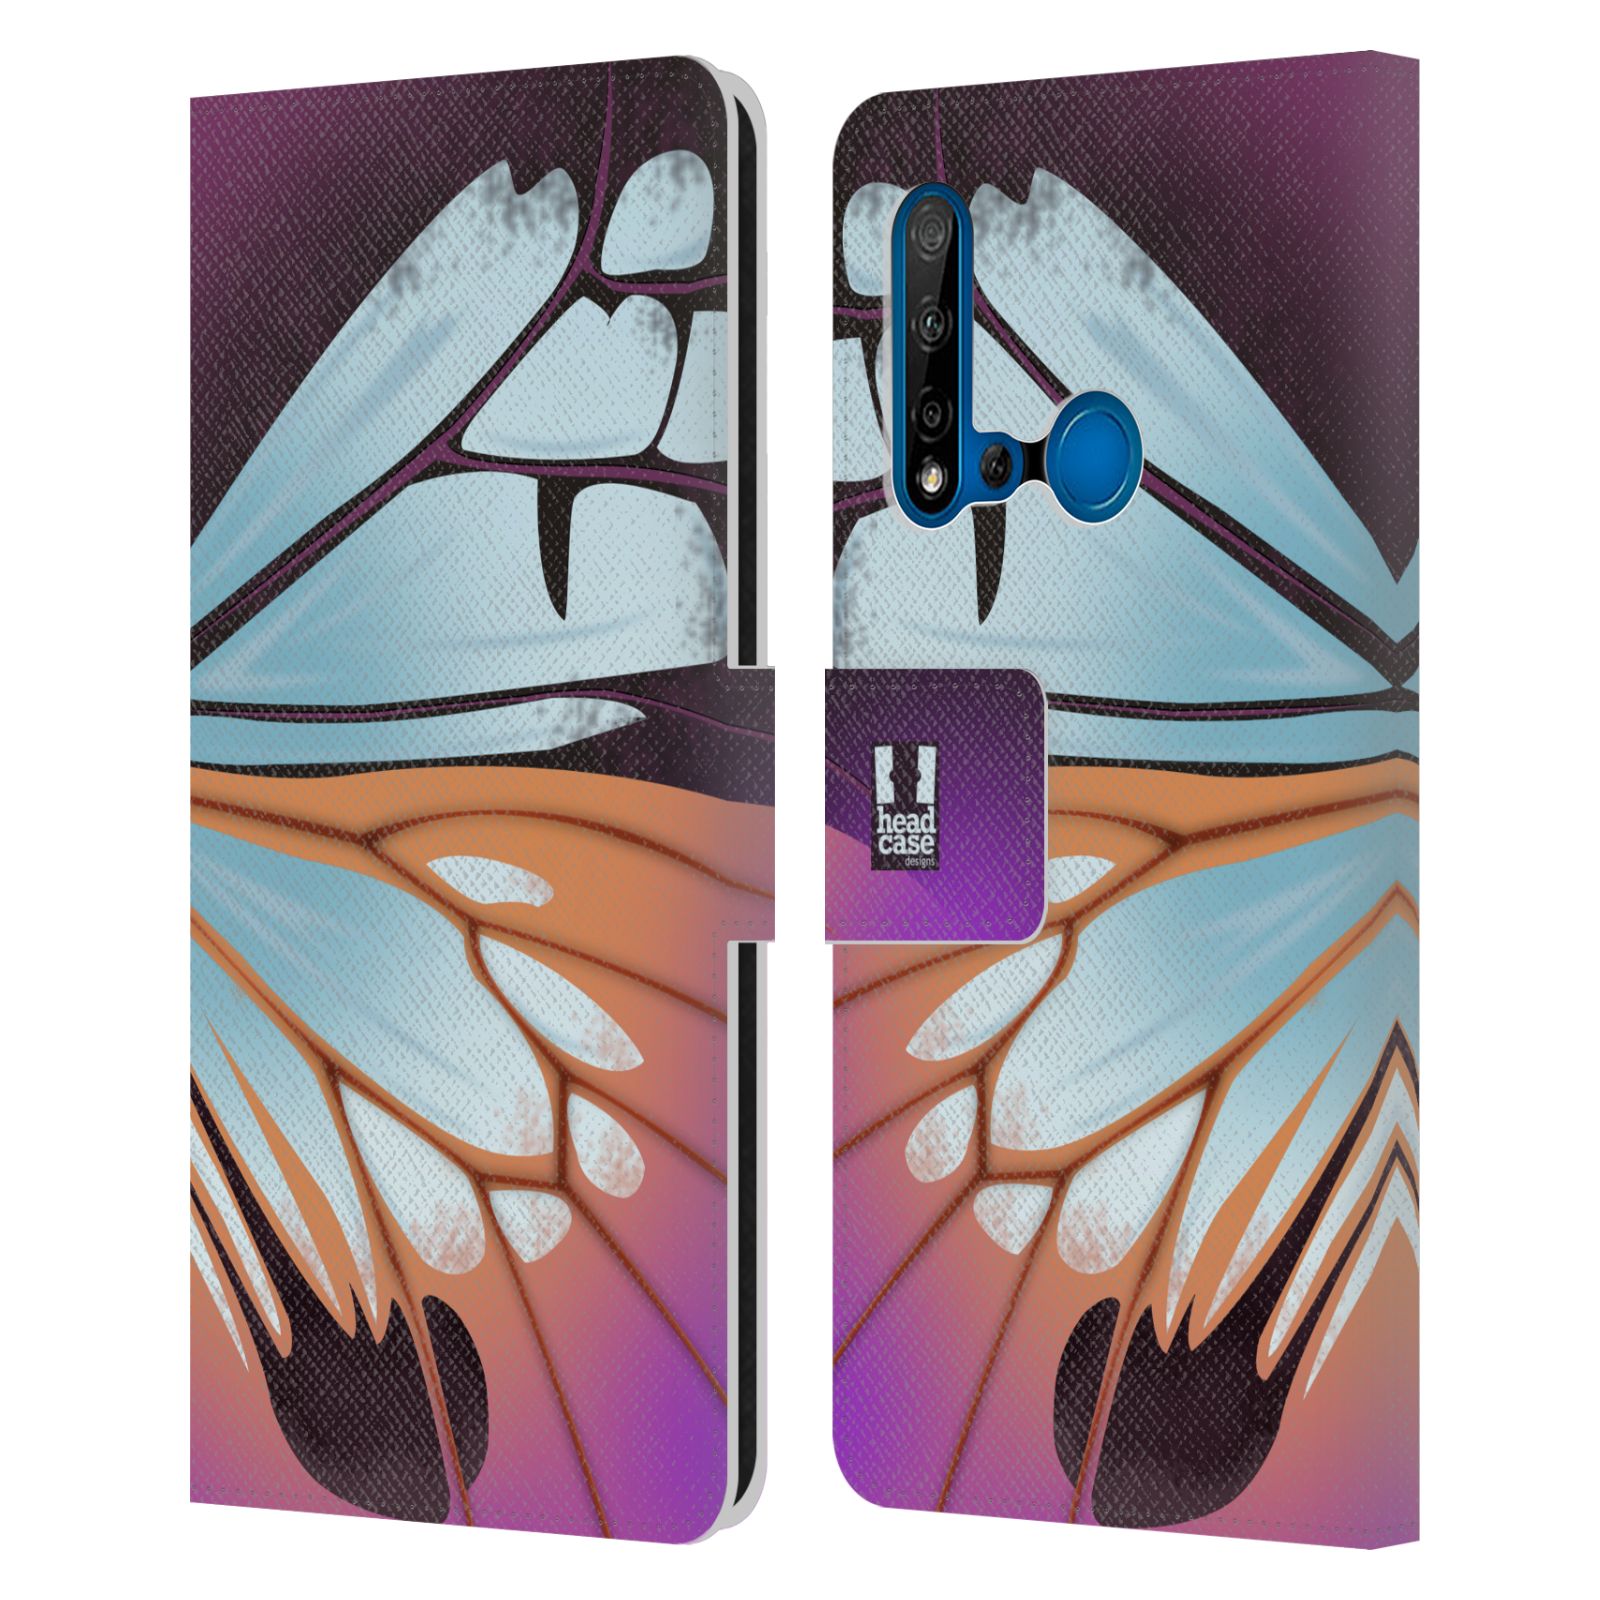 Pouzdro na mobil Huawei P20 LITE 2019 motýl a křídla kreslený vzor fialová a modrá